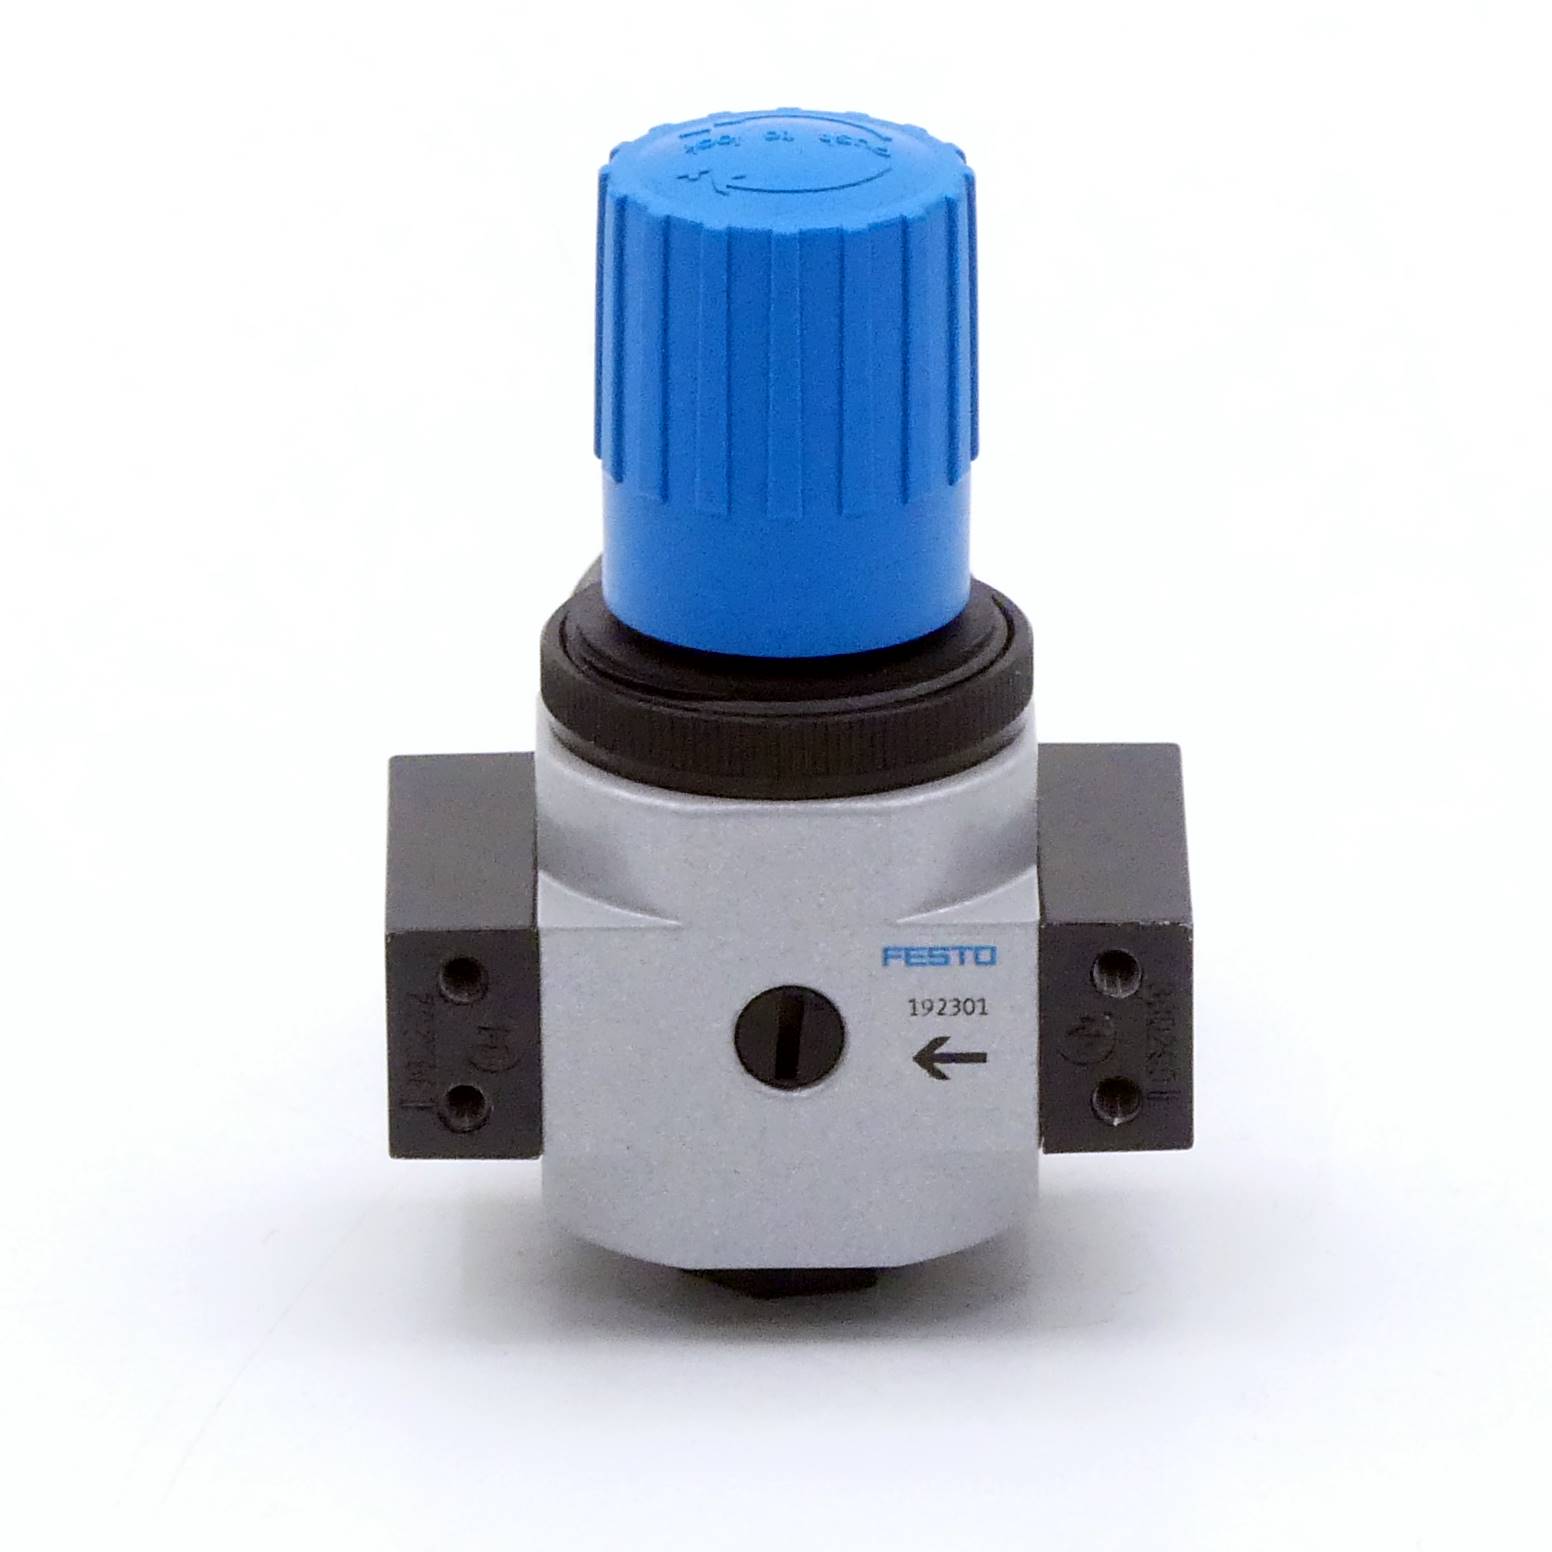 Pressure regulator LR-1/4-D-7-I-MINI 